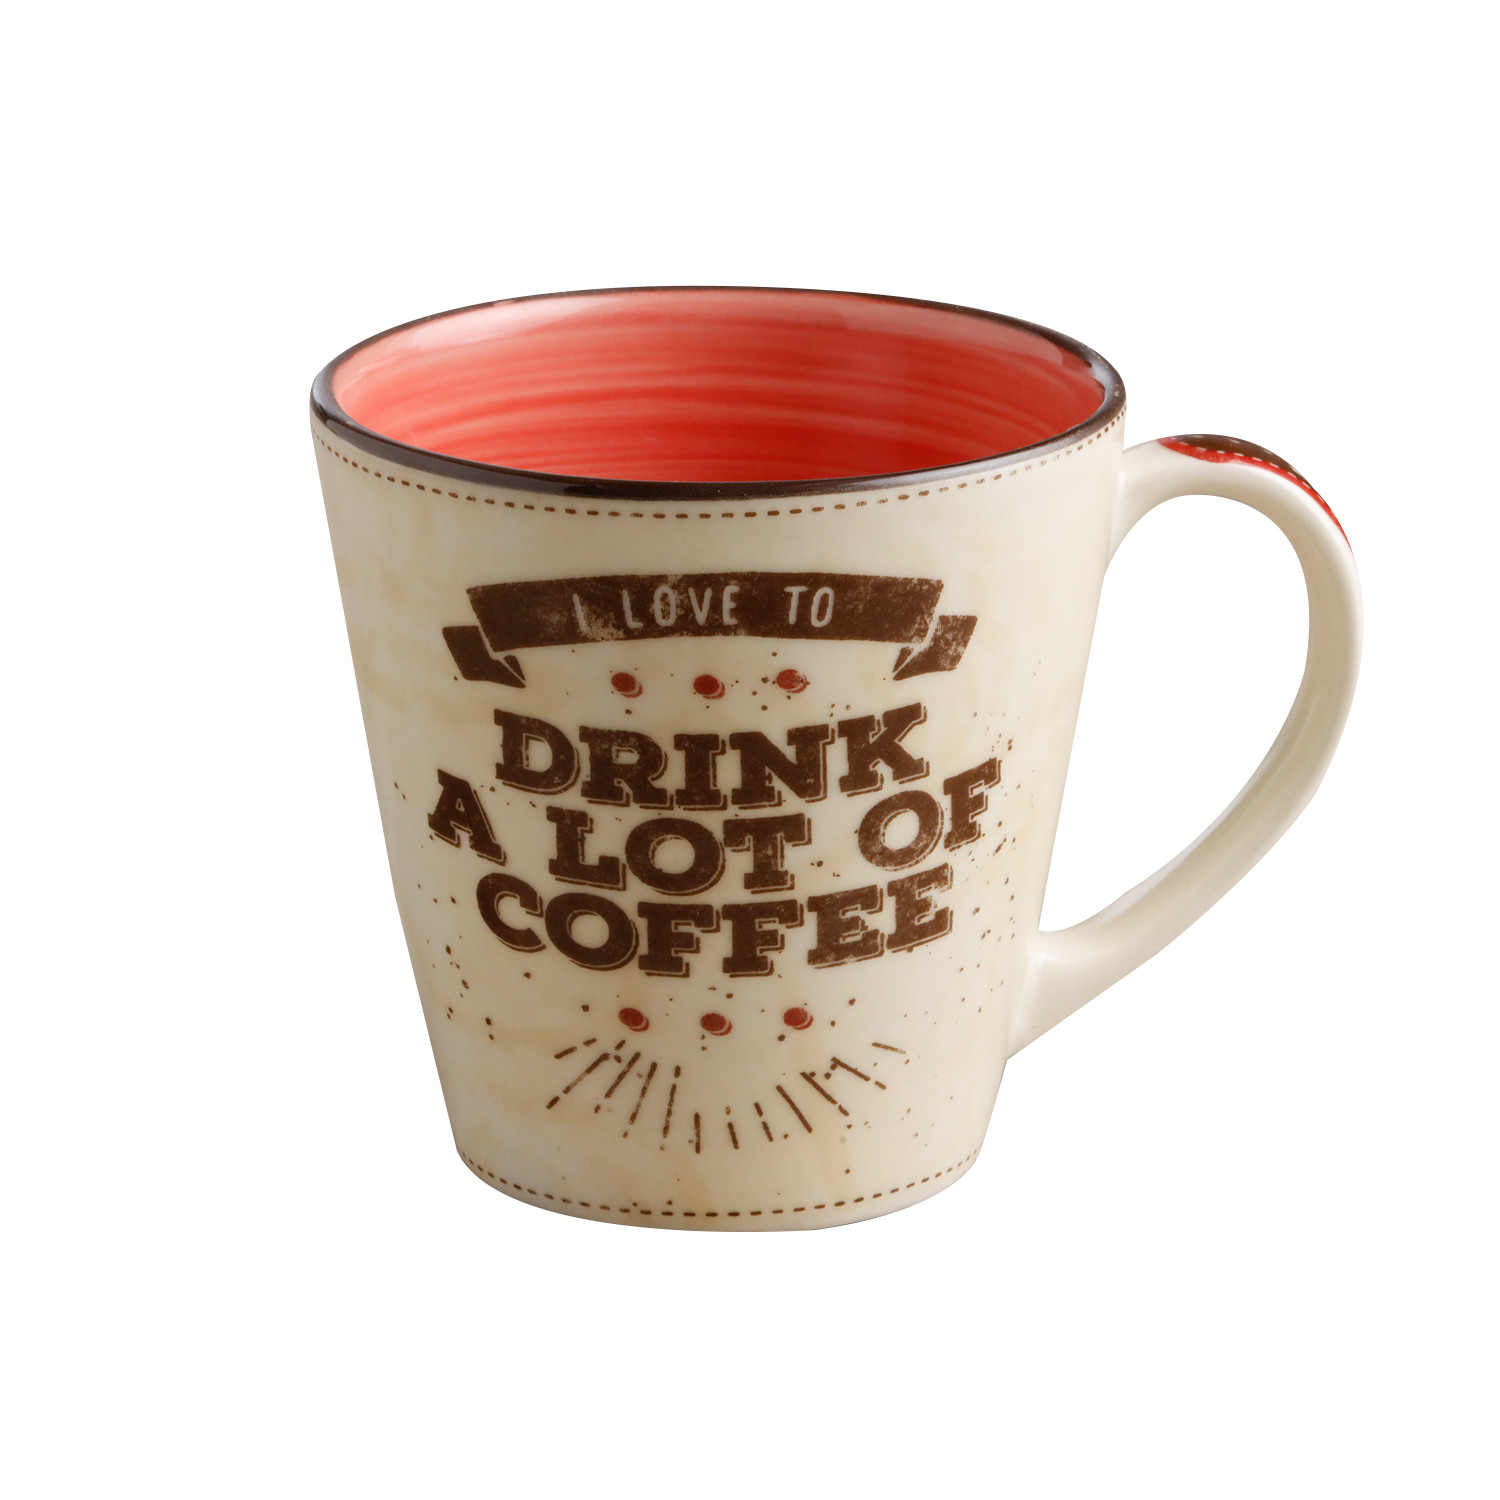 Imagen Mug Drink a lot of Coffee 405 cc 1